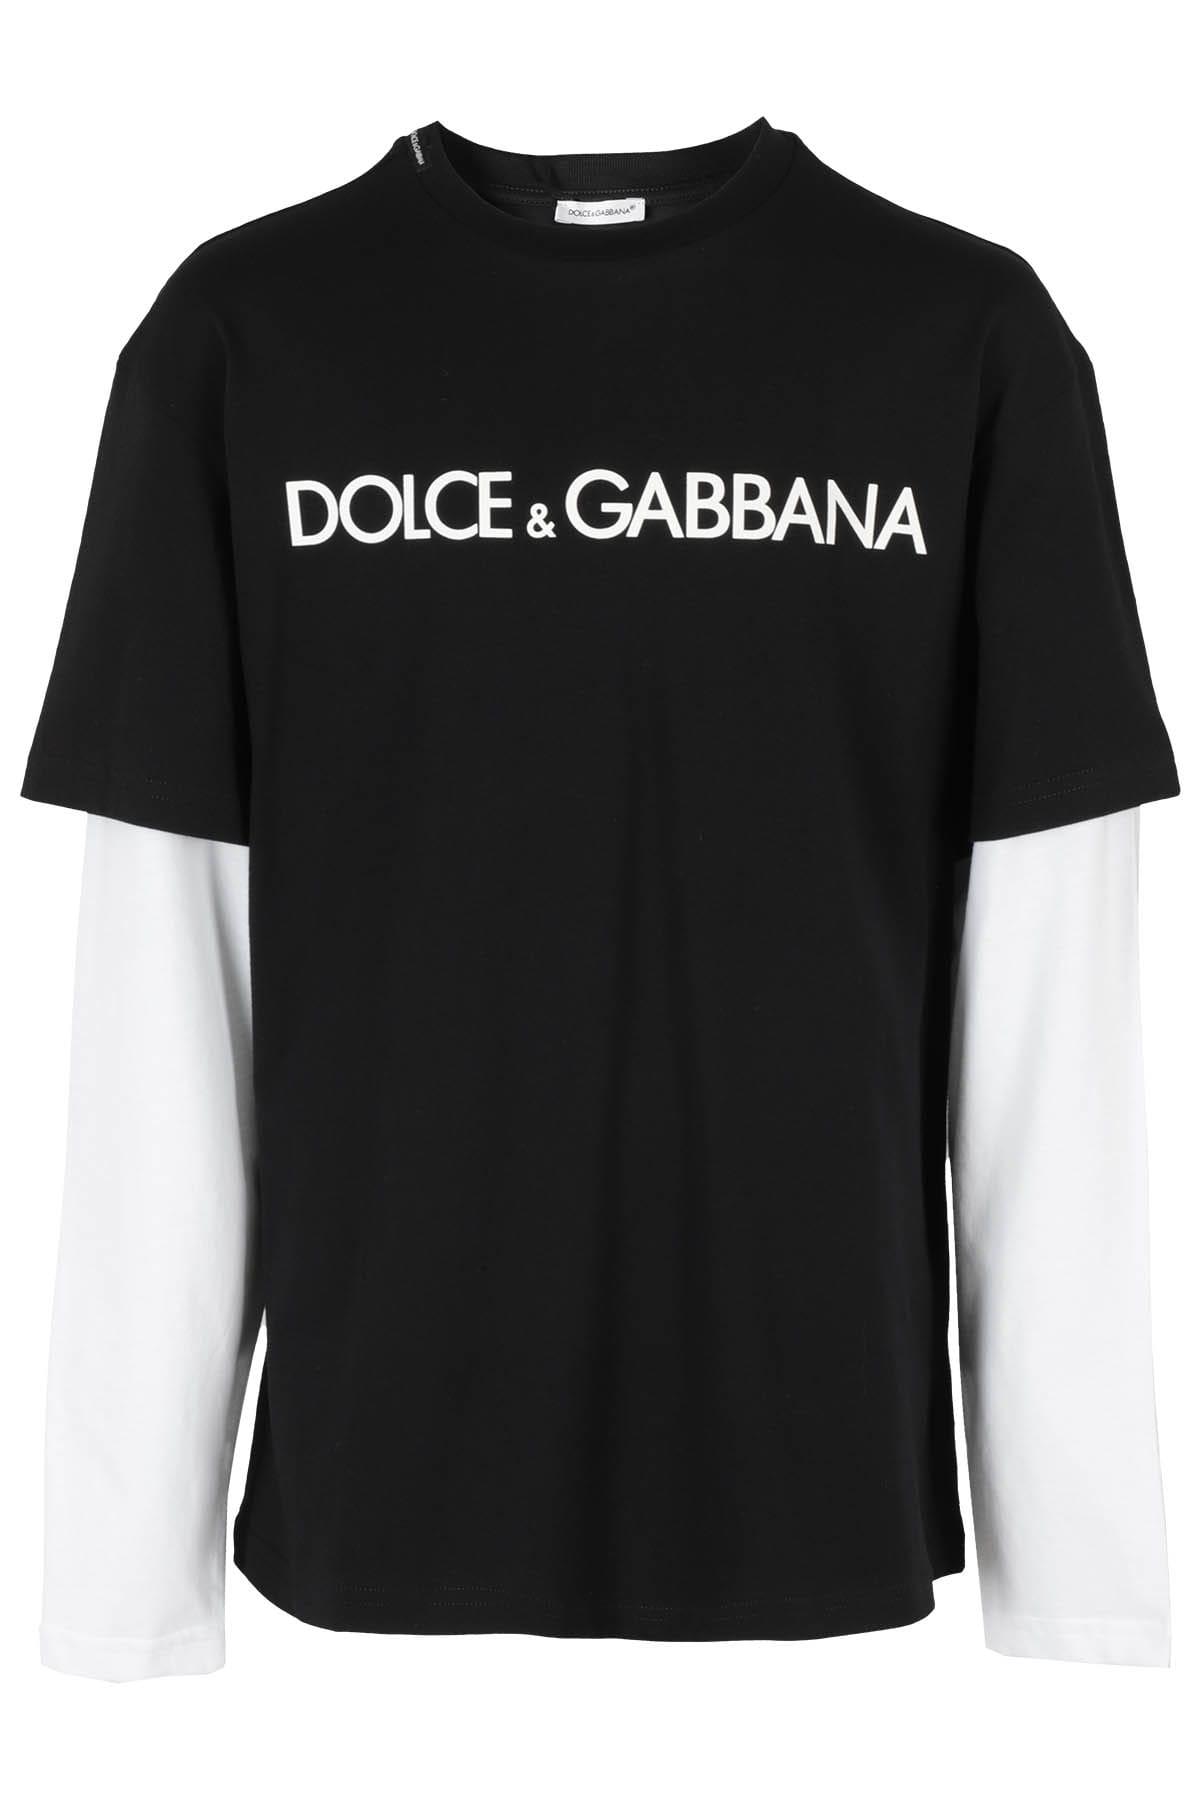 Dolce & Gabbana Tshirt Manica Lunga